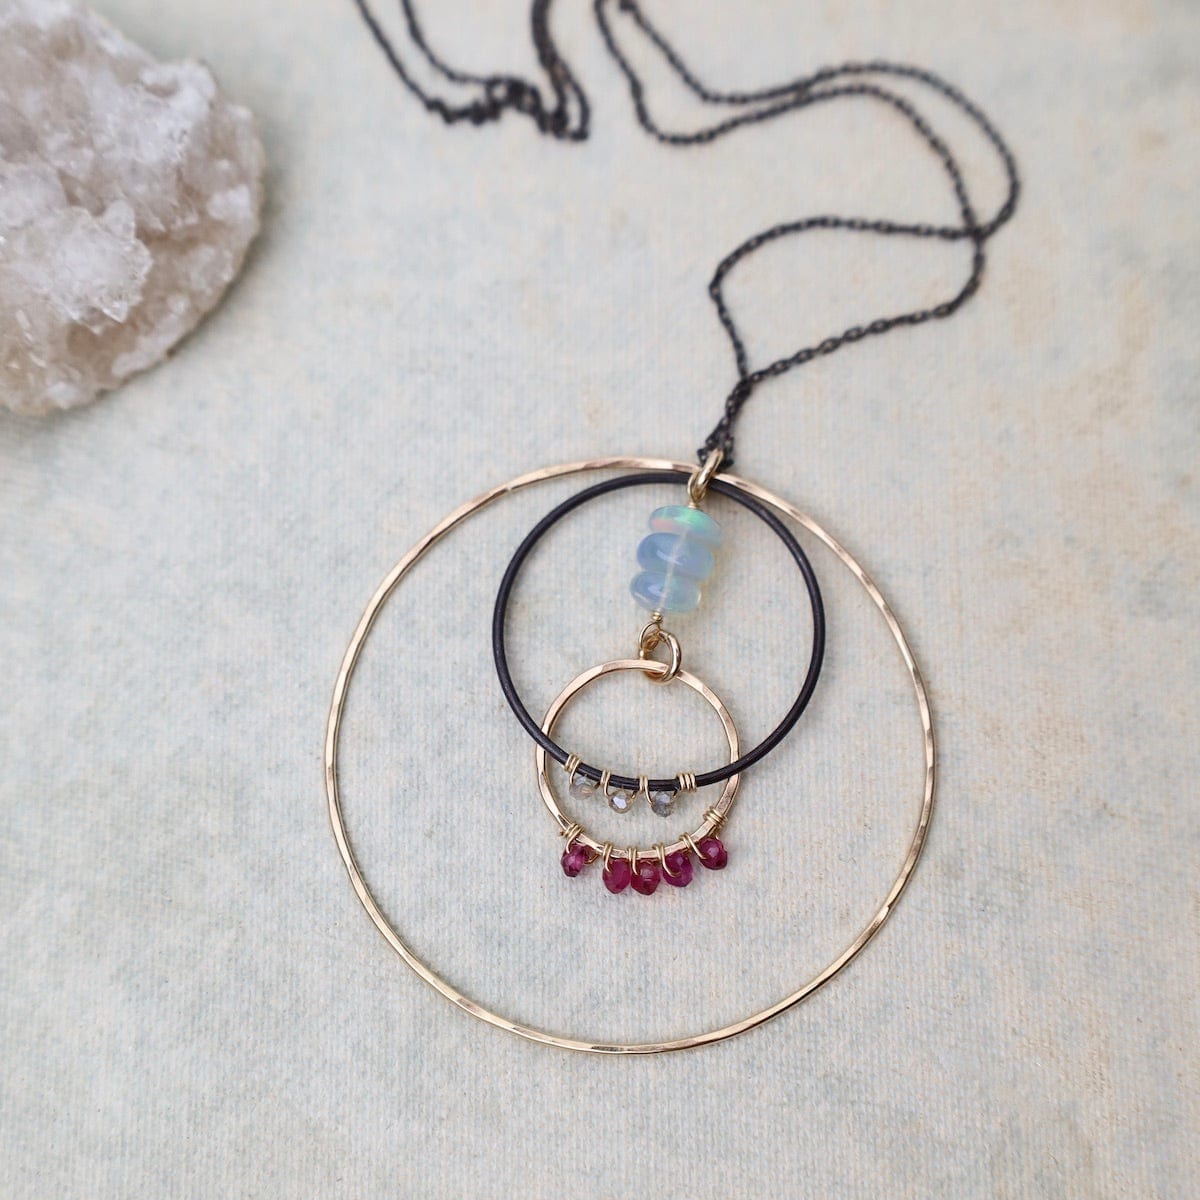 NKL-GF Multi Ring Necklace with Opal, Labradorite, & Garnet